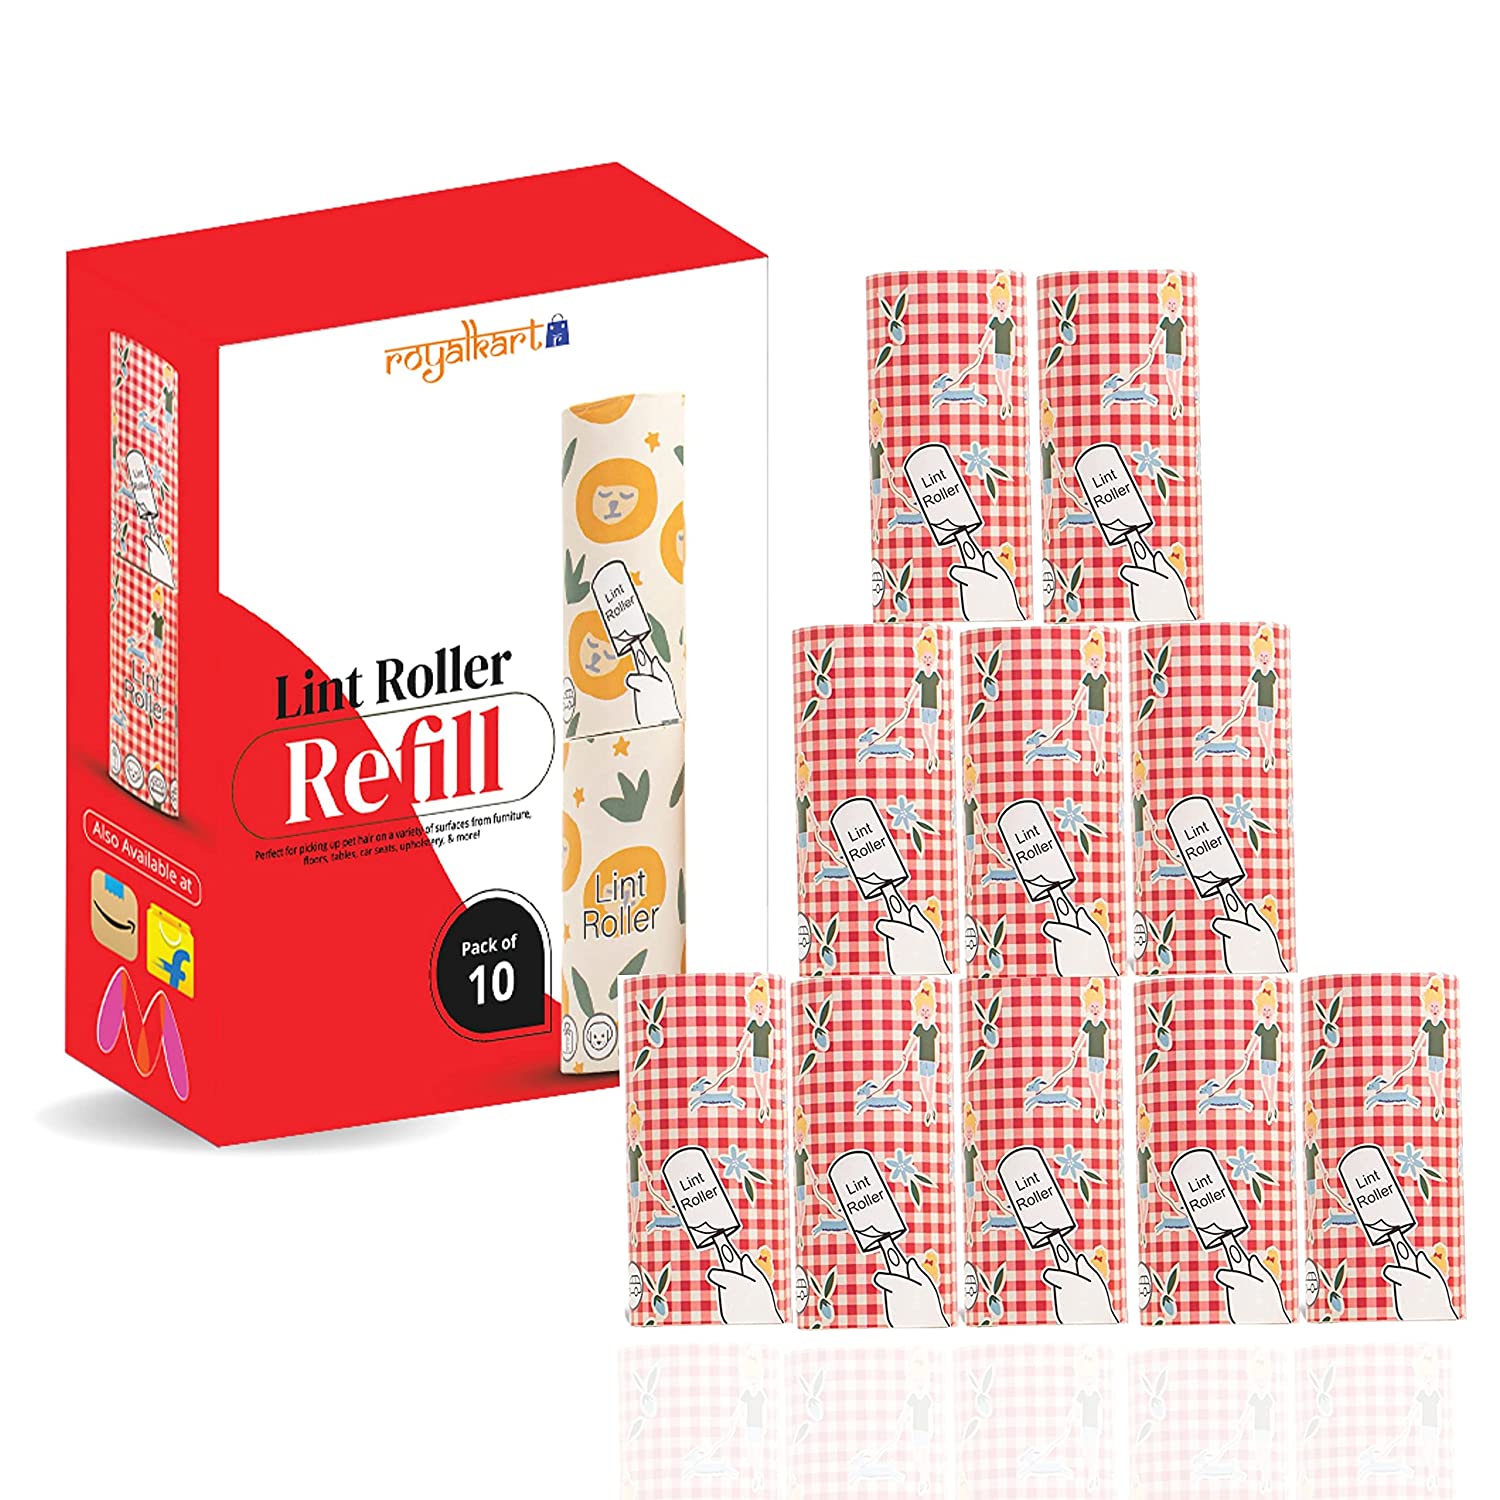 Buy Lint Roller Refill for Dog Hair Removal - #Royalkart#